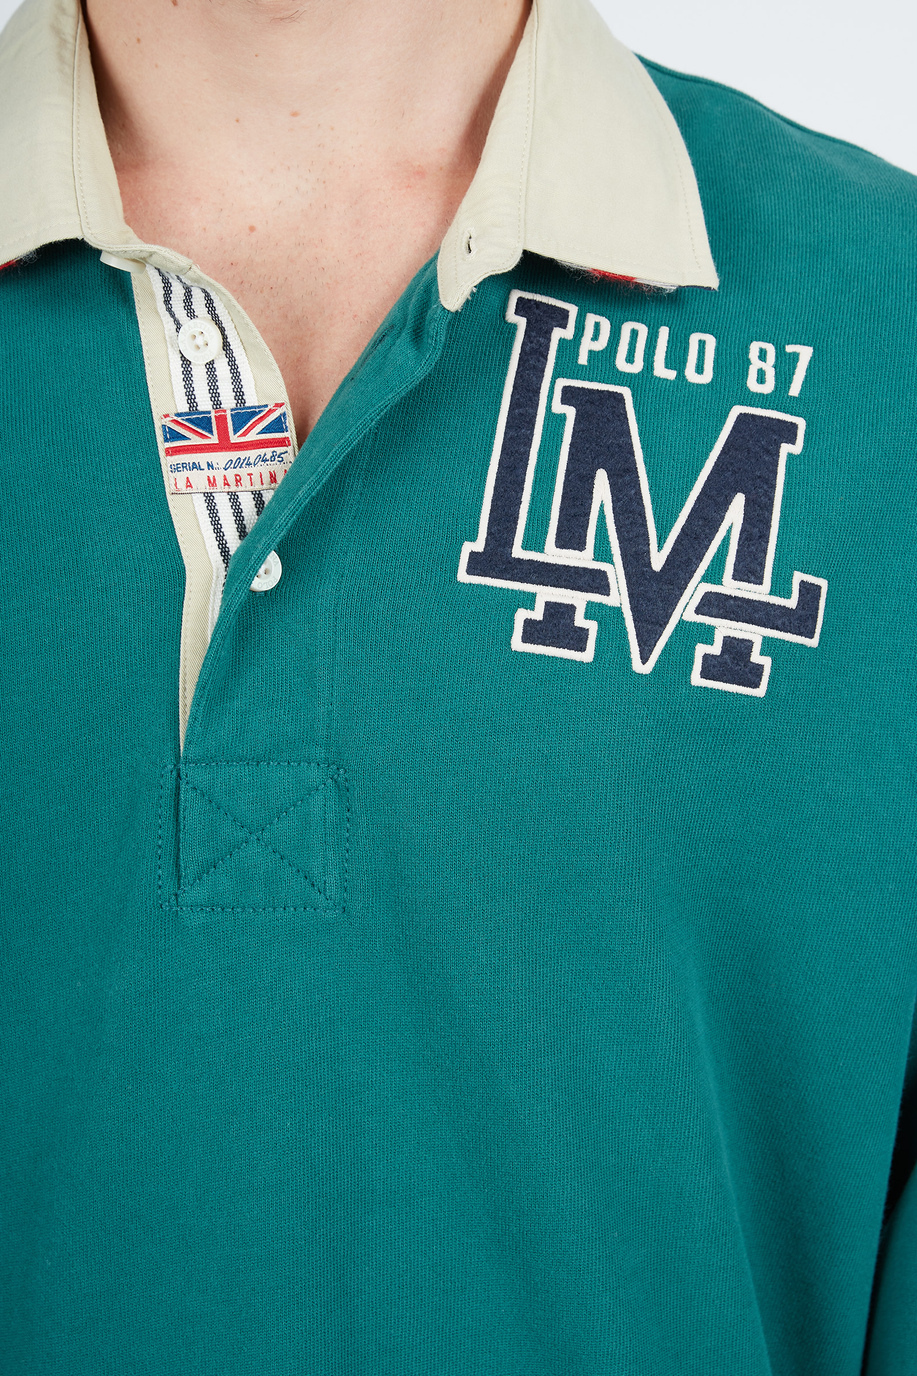 Comfort fit long-sleeved cotton polo shirt for men - Comfort fit | La Martina - Official Online Shop